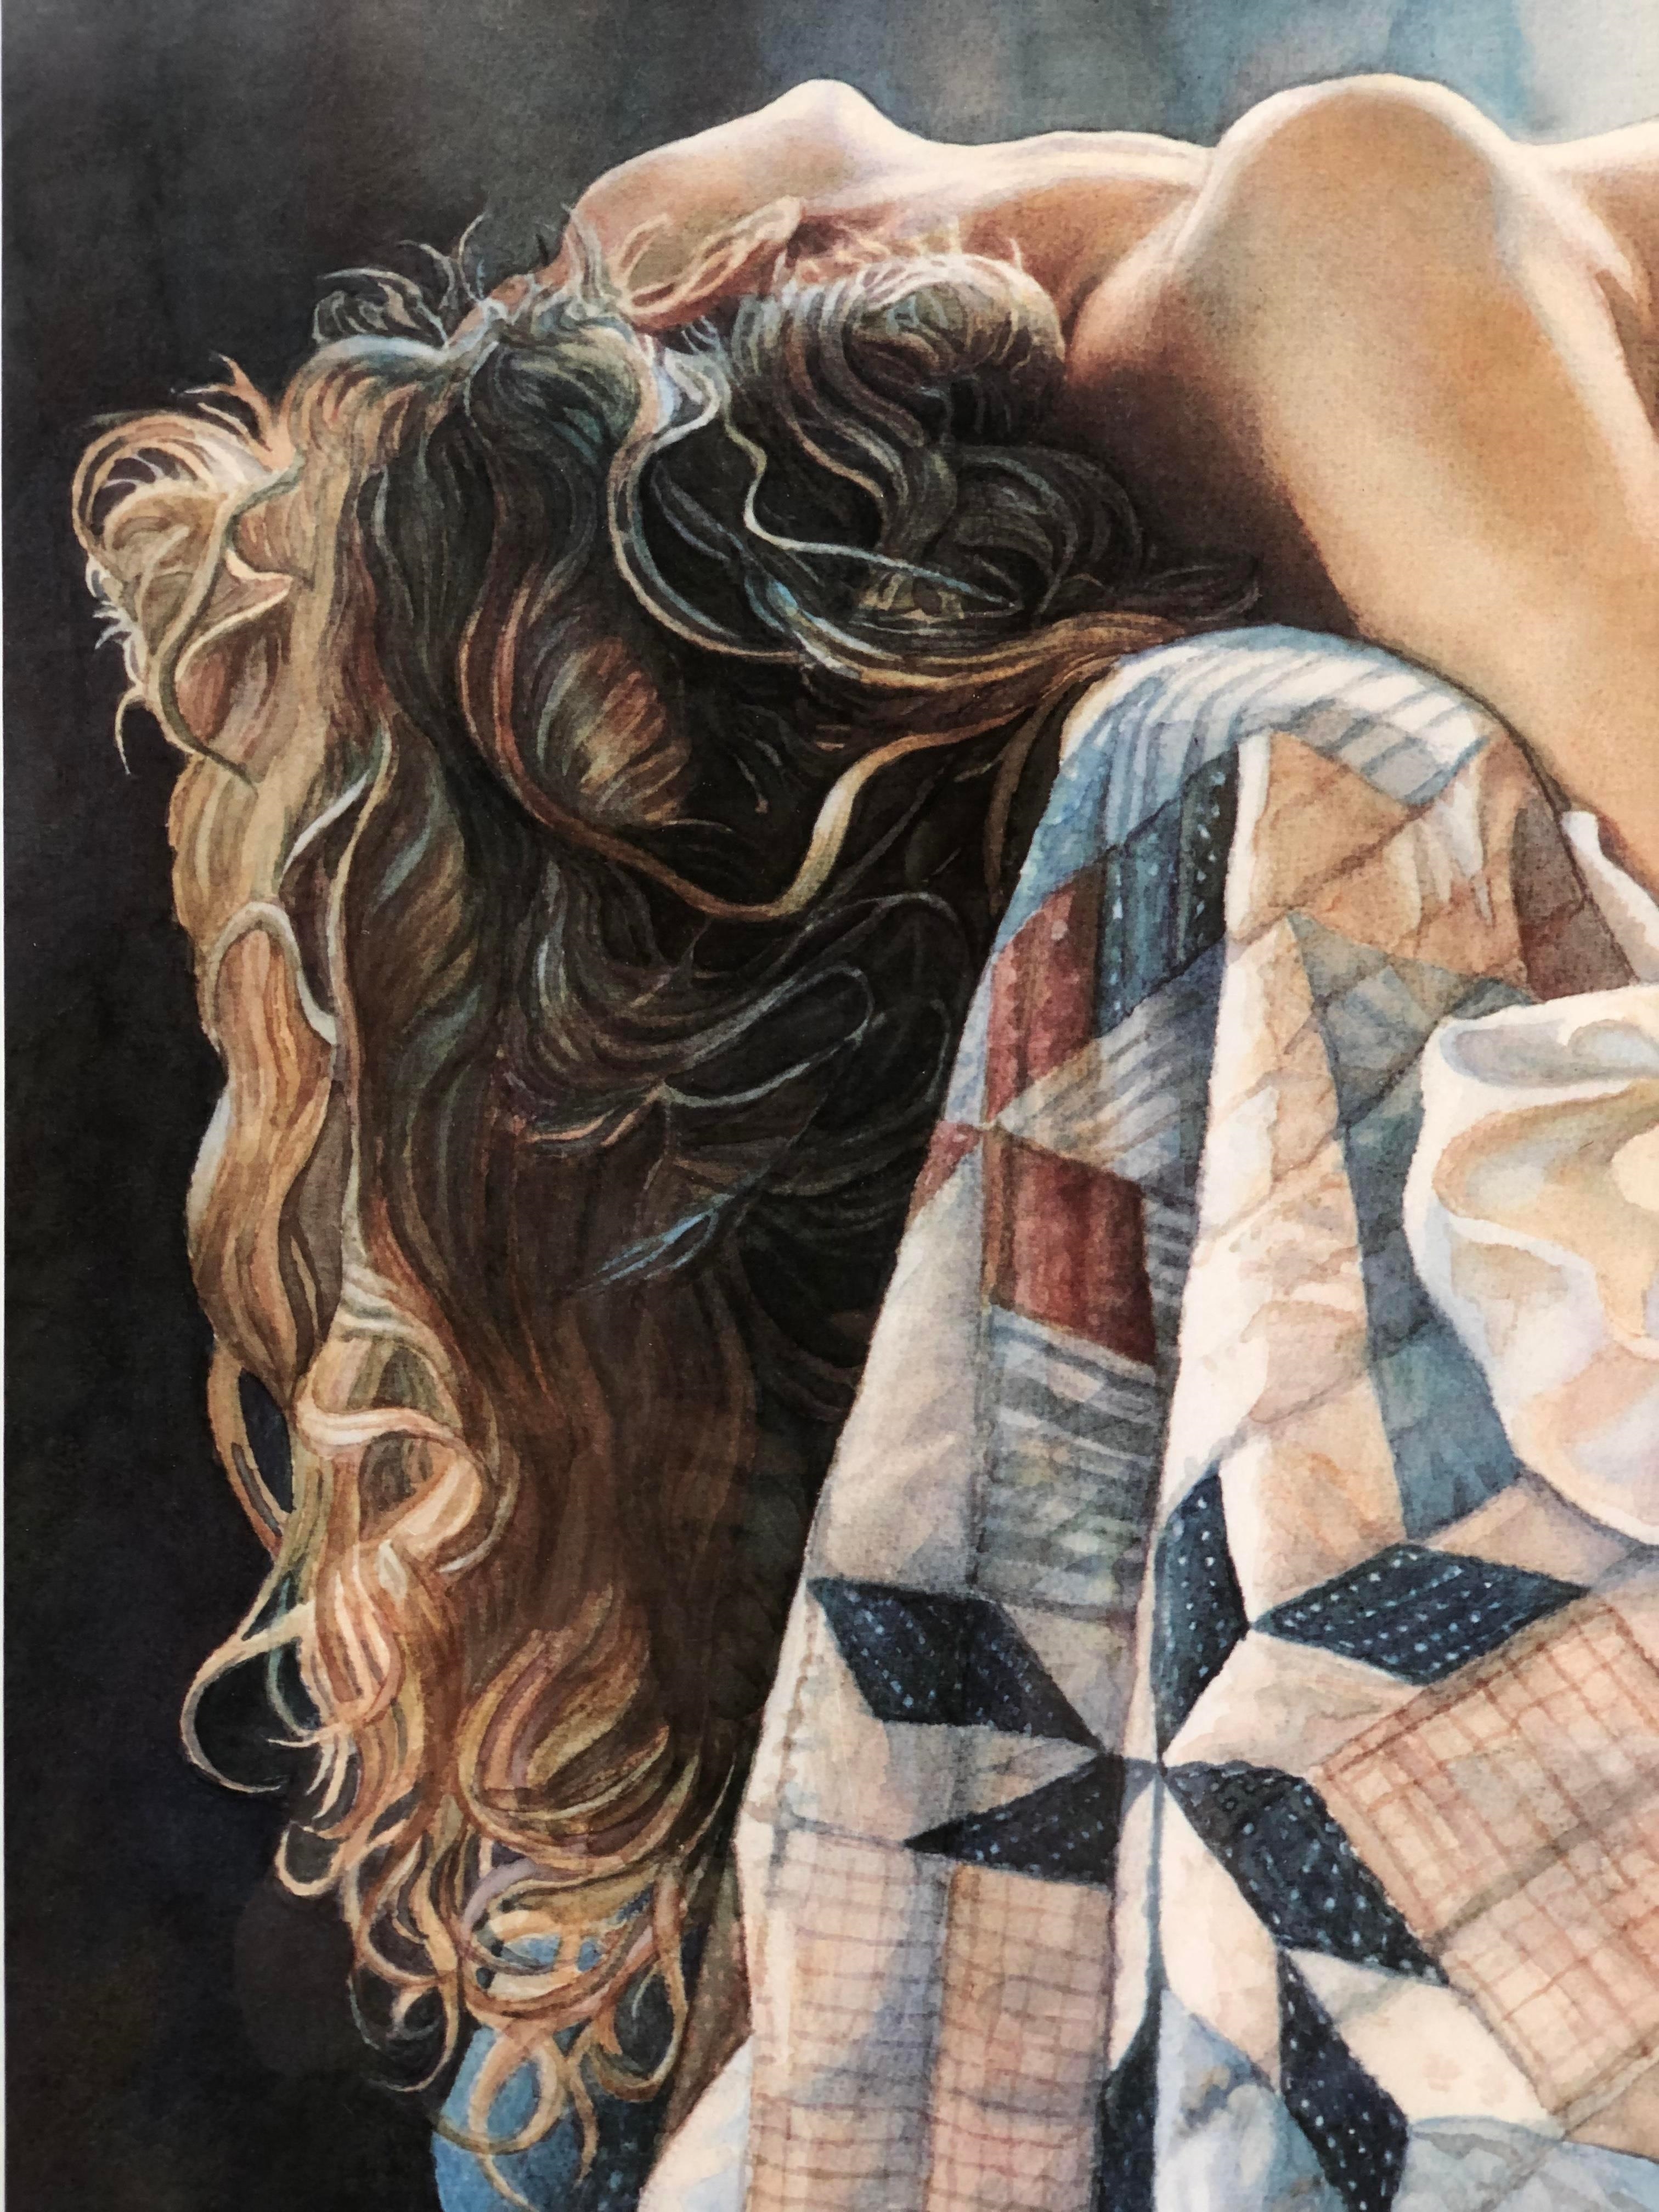 Artwork by Steve Hanks, "IN HER EMOTION", Made of watercolors